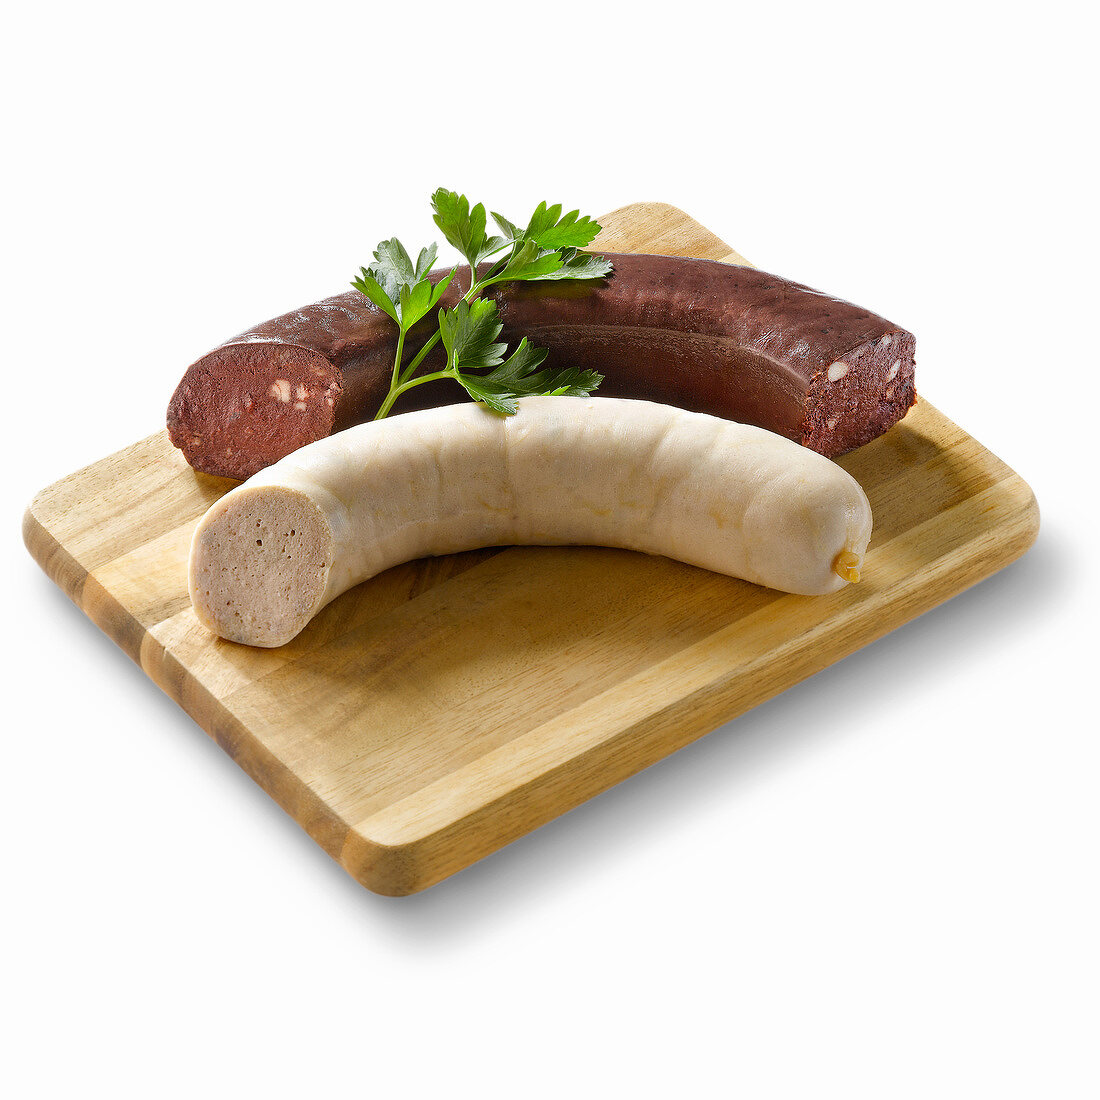 White sausage and blood sausage